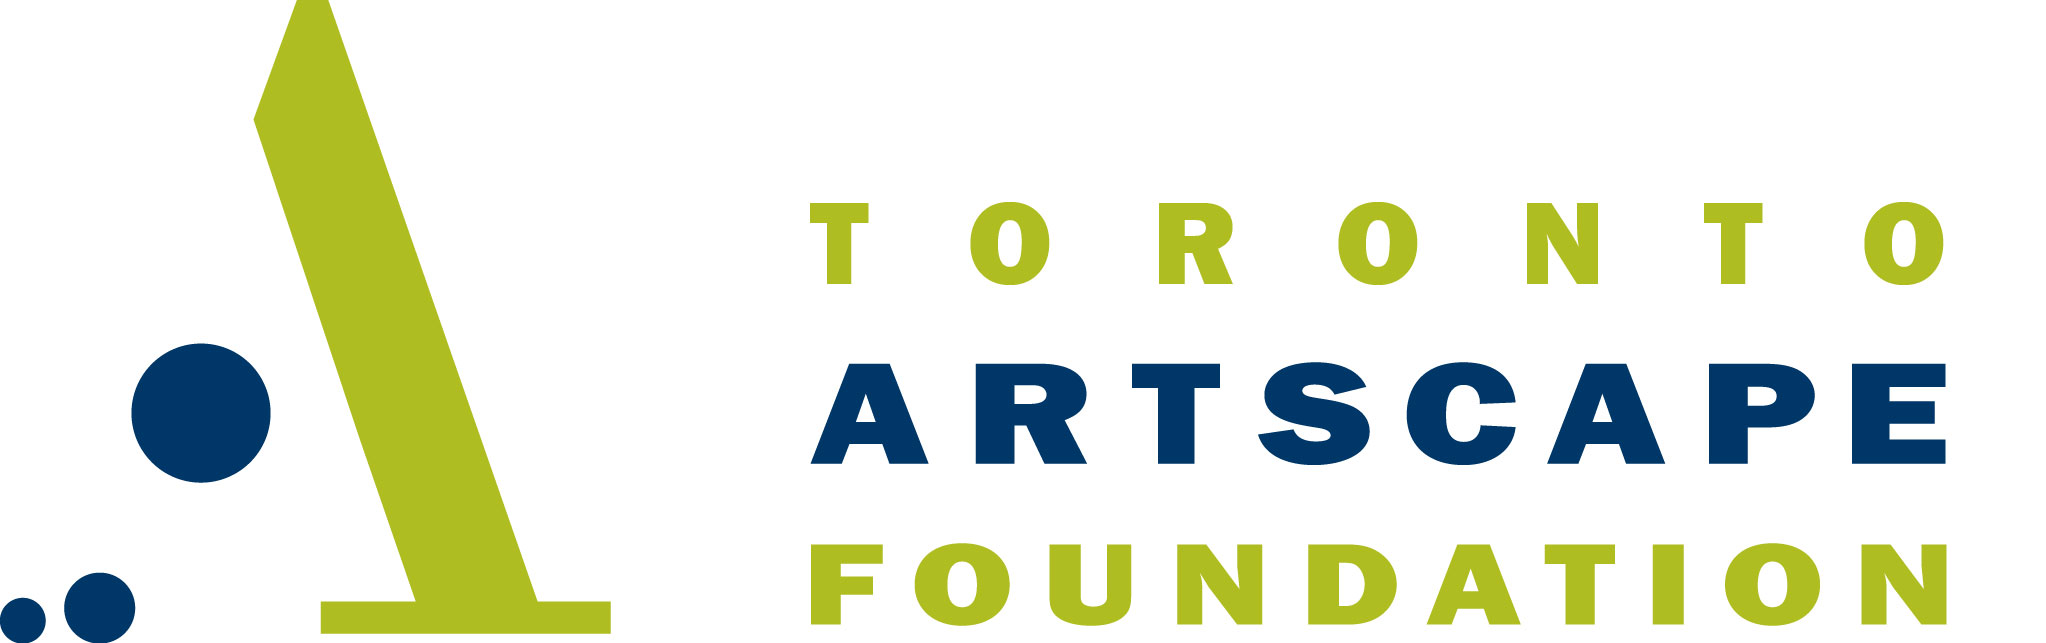 Toronto Artscape Foundation logo